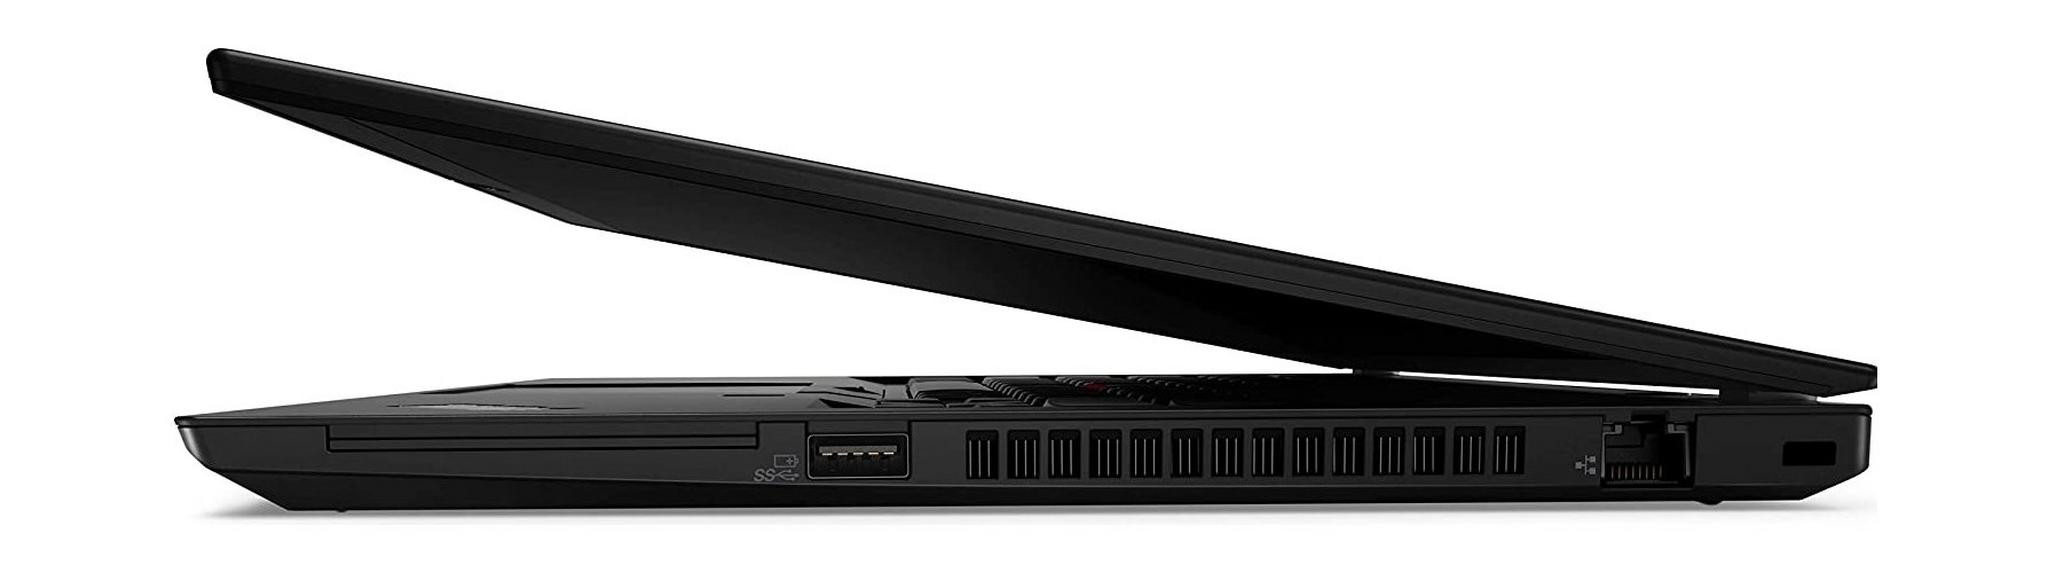 Lenovo T490 Core i7 8GB RAM 256GB SSD 14-inch Laptop - Black